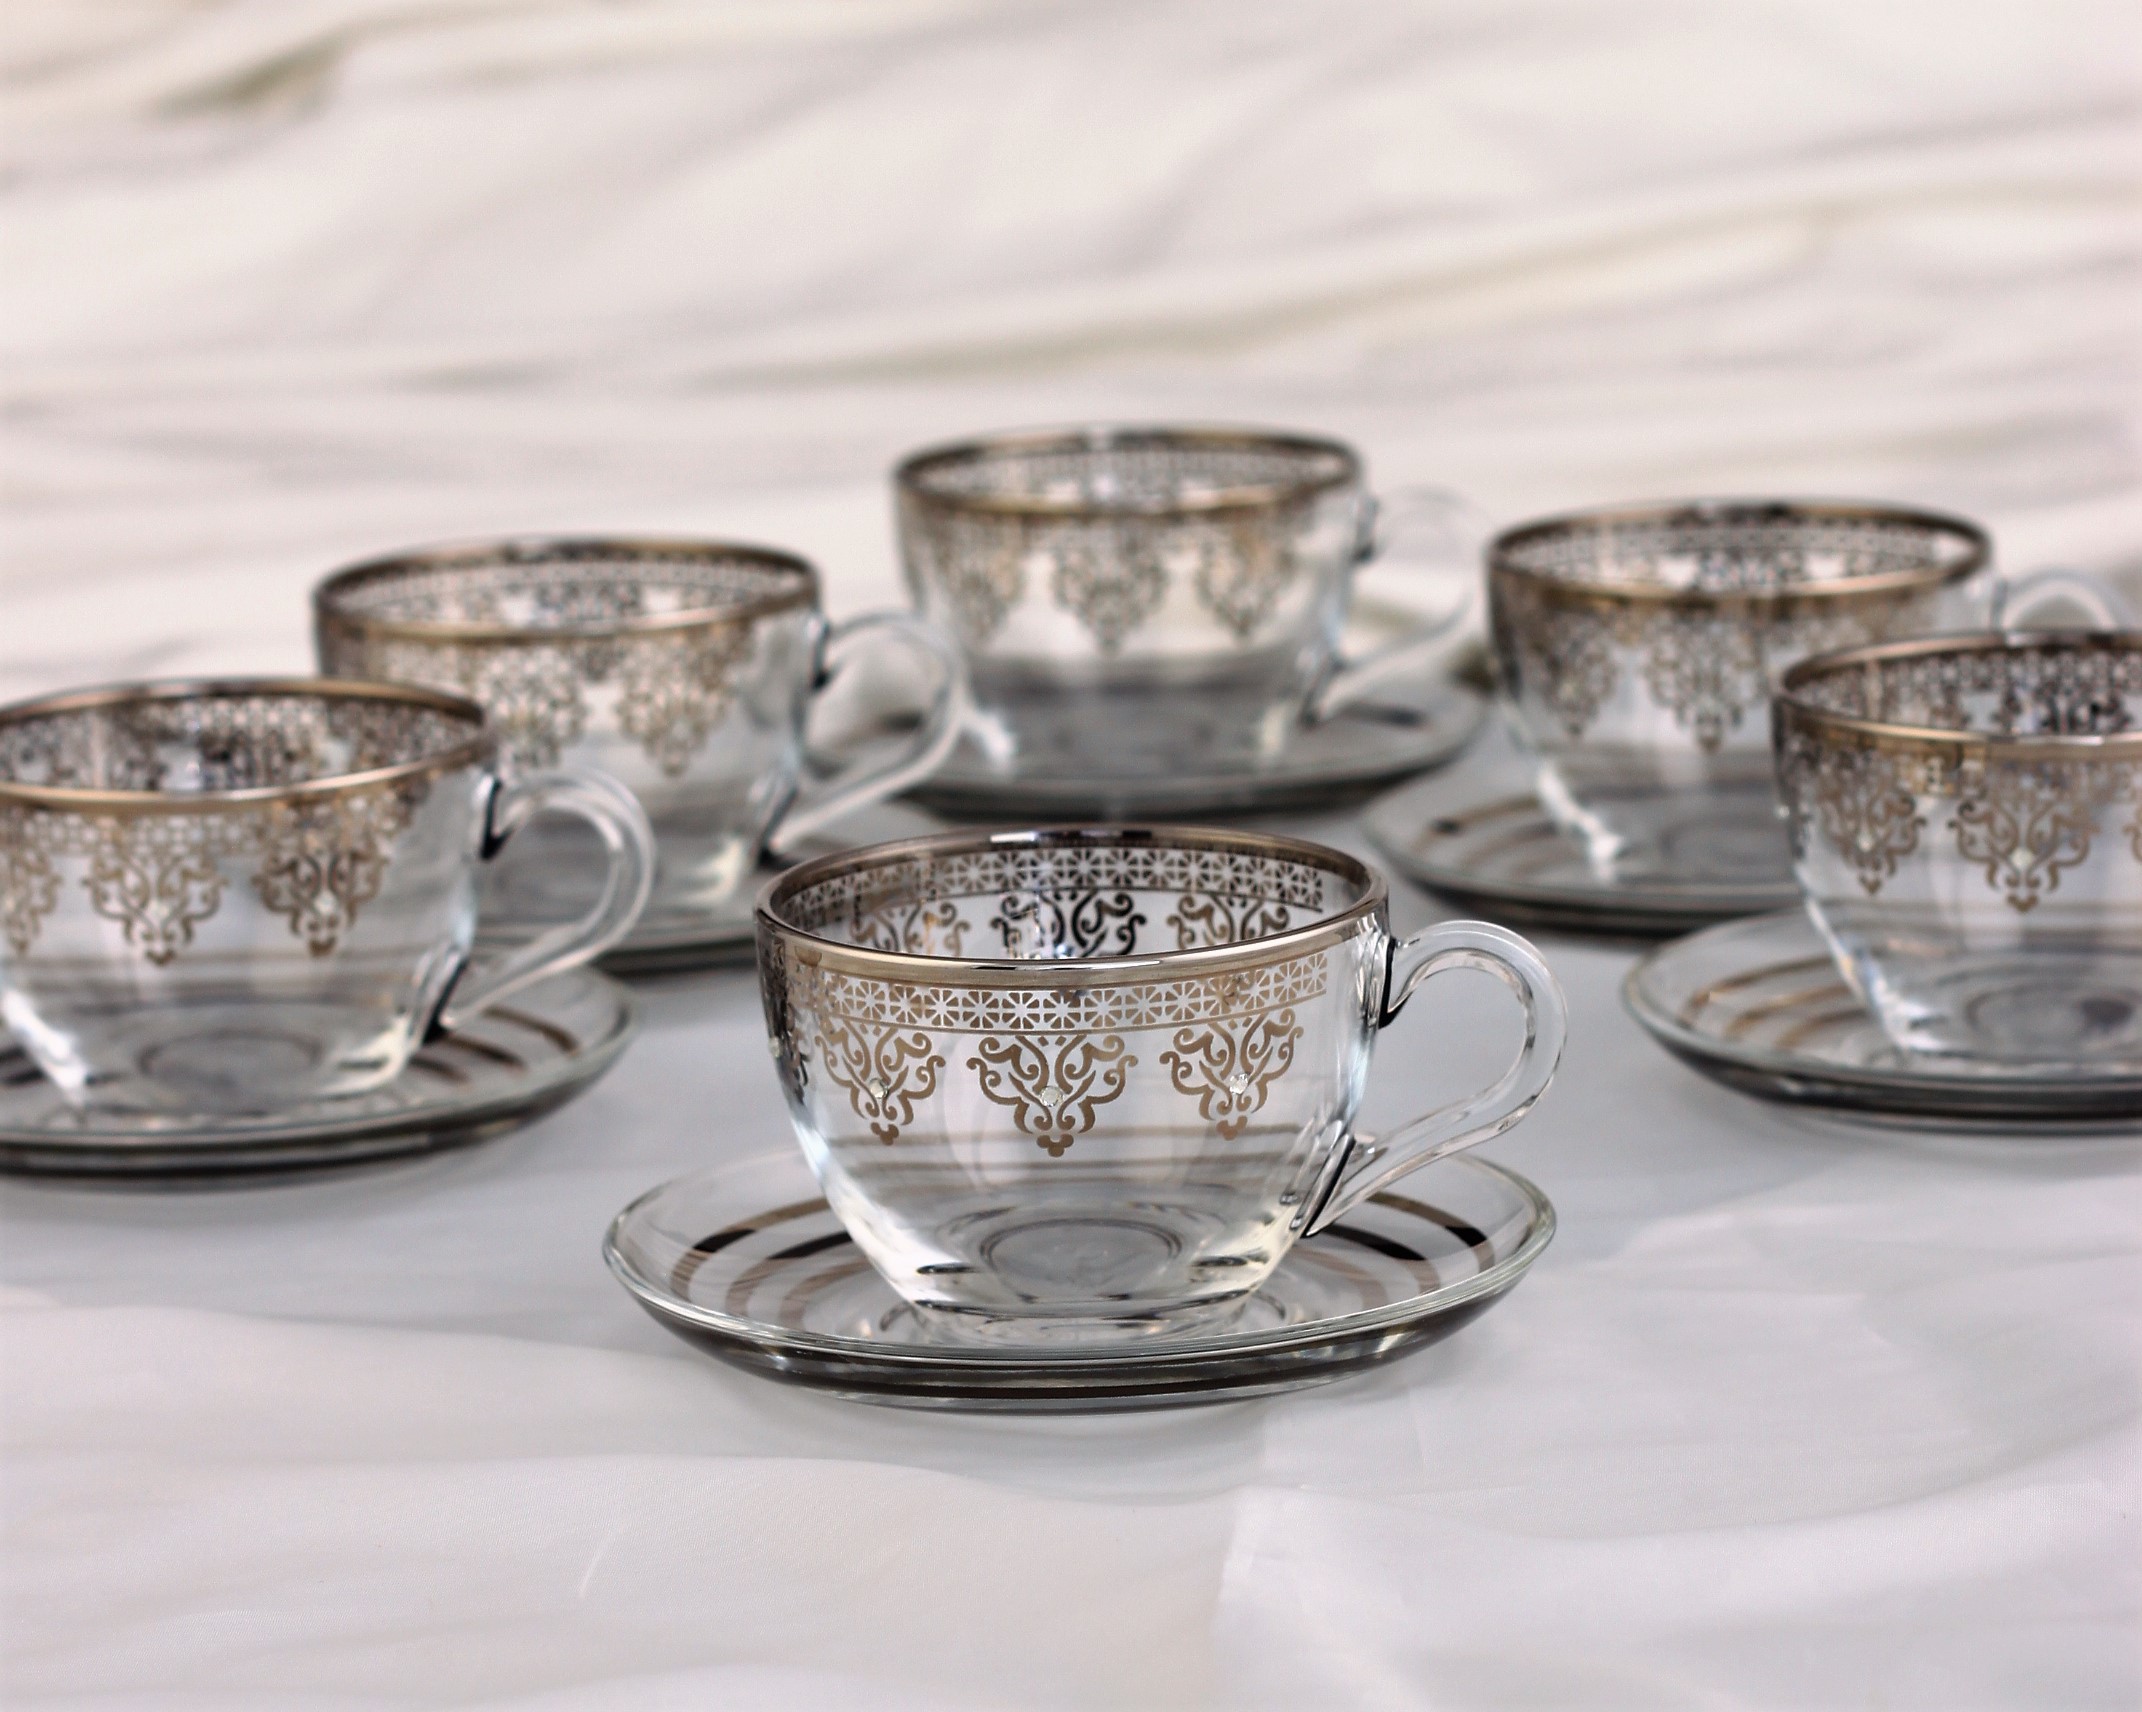 Silver Glass Crushed Diamond Small Tea Cup and Saucer Set Kitchen Turkish  Coffee Mug 